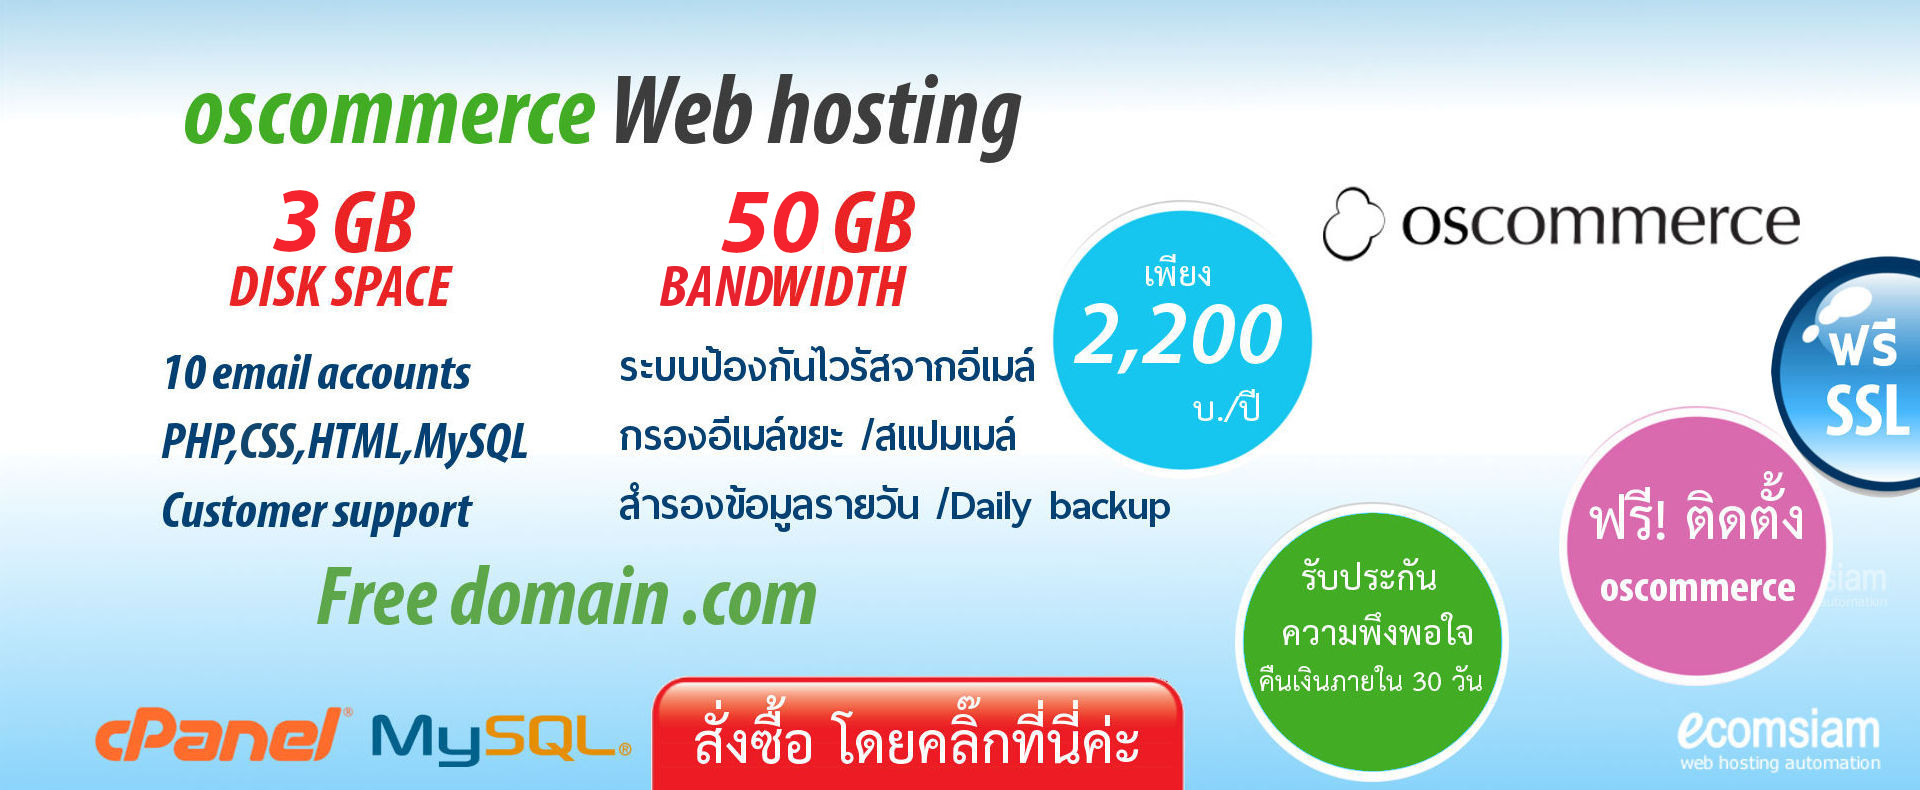 web hosting thai แนะนำ Oscommerce web hosting thailand เพียง 2,200 บ./ปี เว็บโฮสติ้งไทย ฟรี โดเมน ฟรี SSL ฟรีติดตั้ง แนะนำเว็บโฮสติ้ง บริการลูกค้า  Support ดูแลดี โดย webhosting.com.co.th - oscommerce web hosting thailand free domain